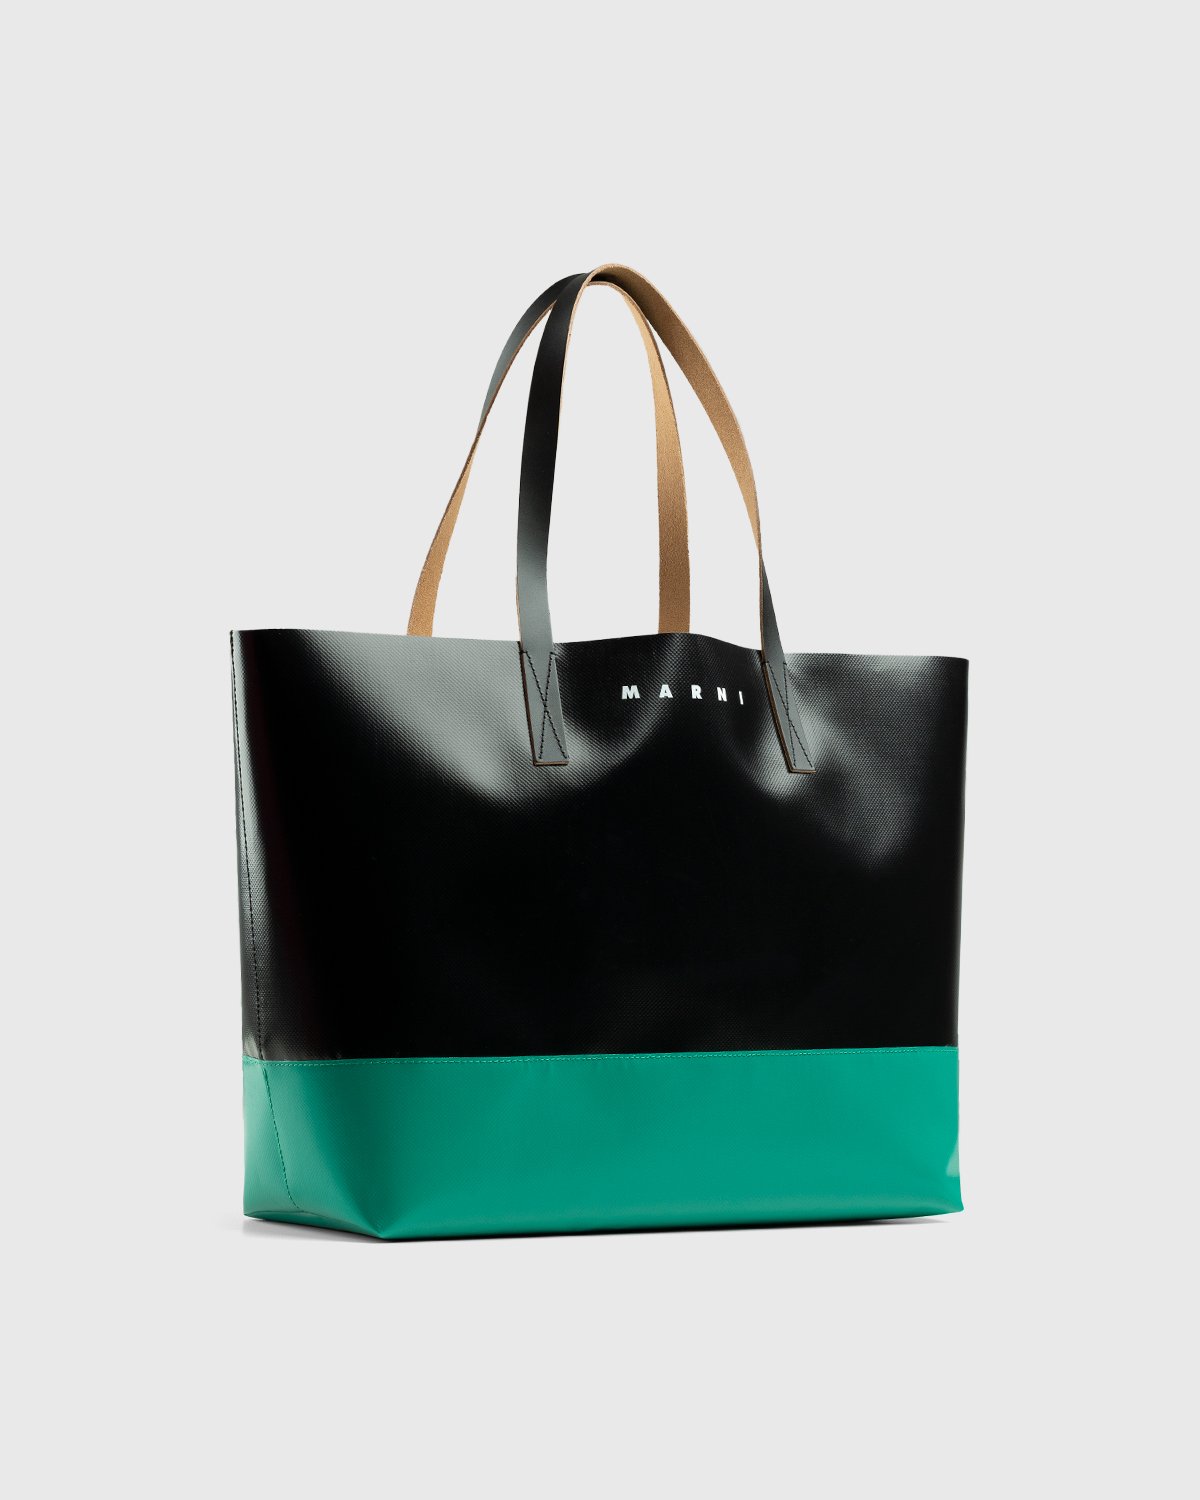 Marni - Tribeca Two-Tone Tote Bag Black/Green - Accessories - Black - Image 3